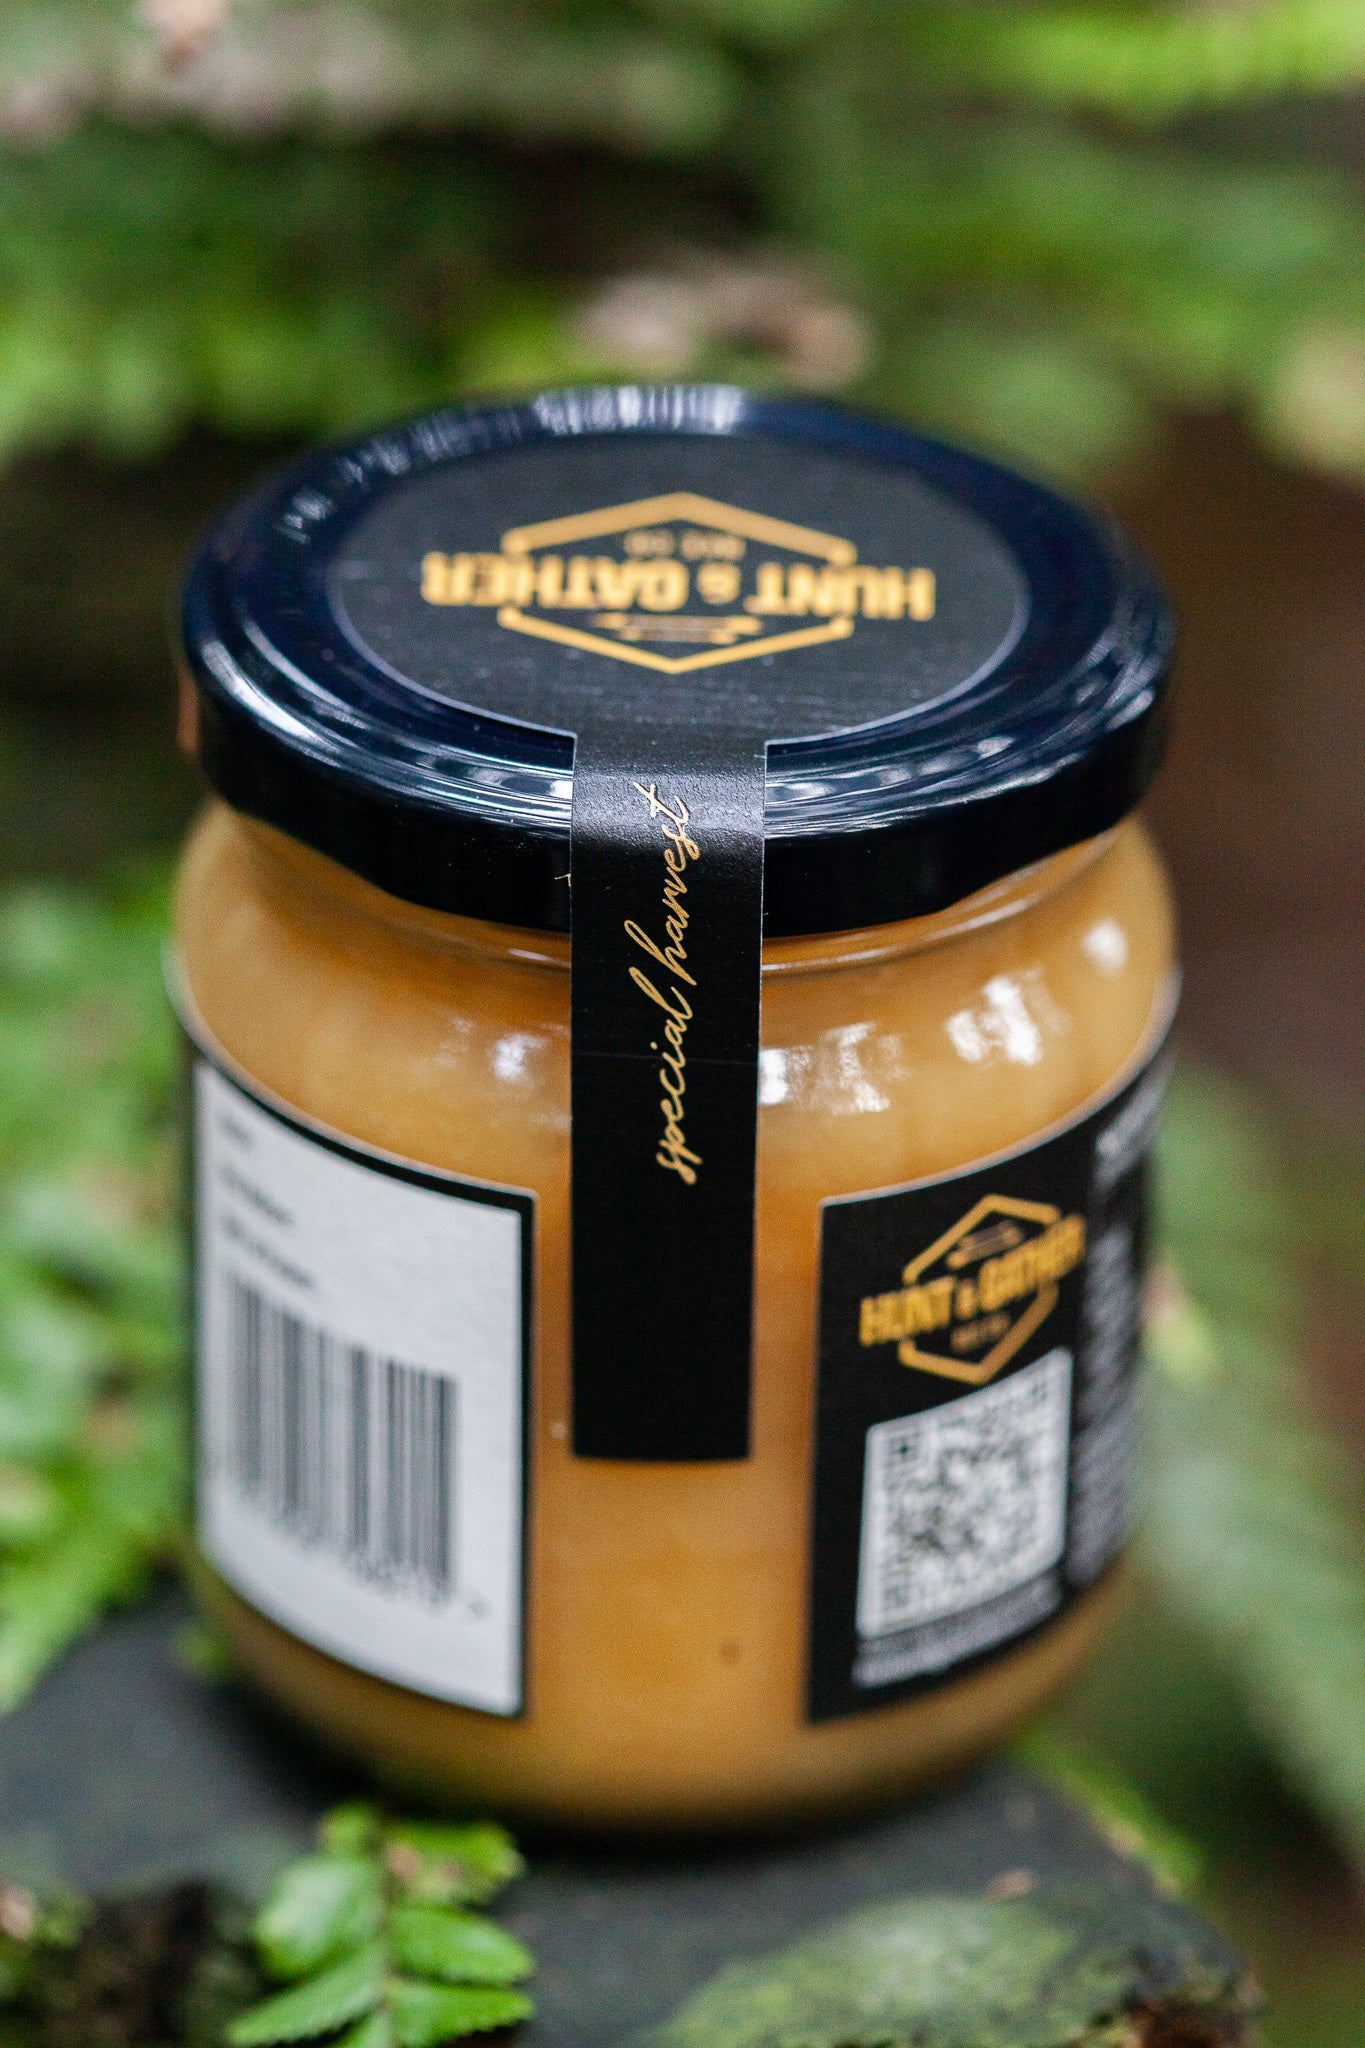 Special Harvest - Kānuka Honey